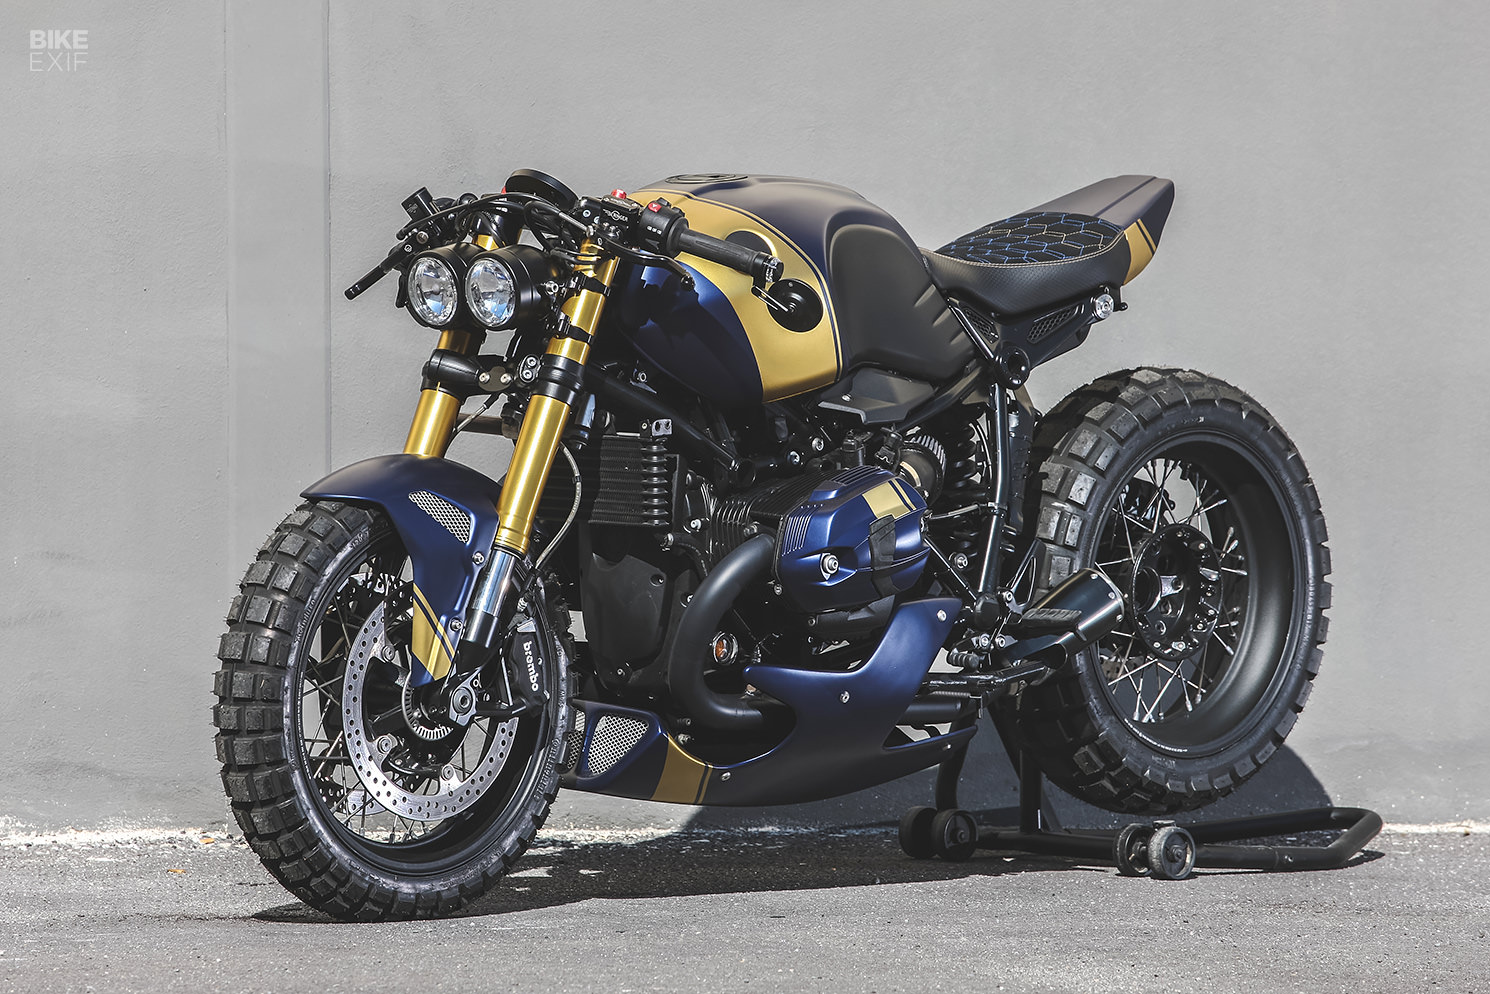 Custom BMW R nineT streetfighter by Duke Motorcycles